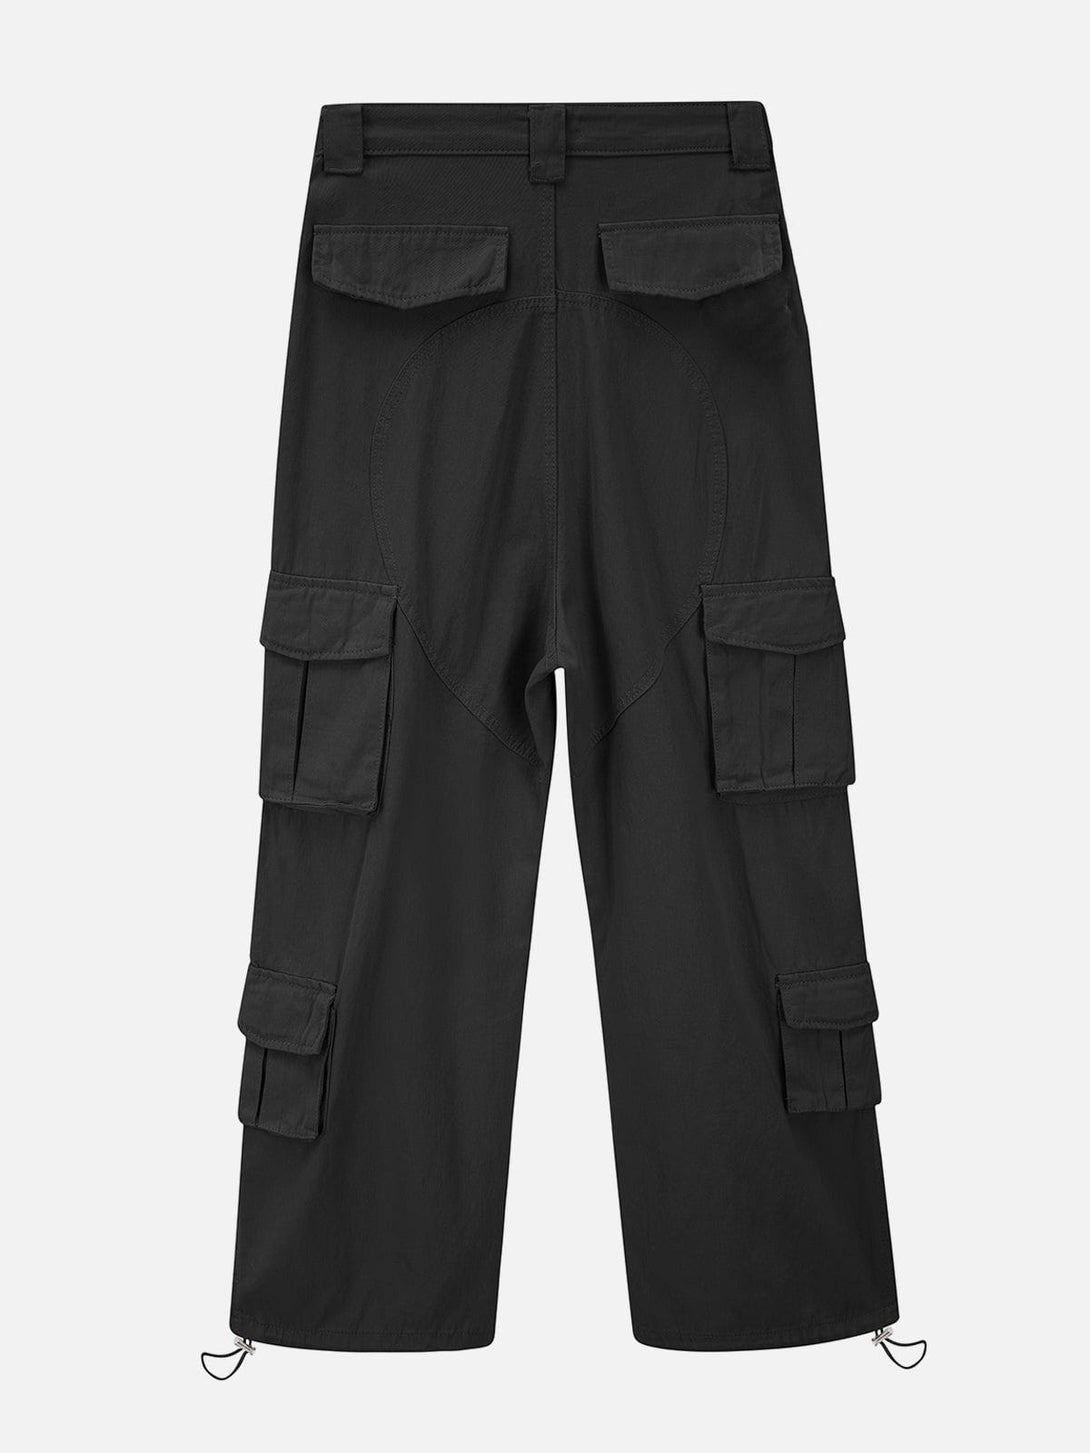 Levefly - Vintage Multi-Pocket Solid Cargo Pants - Streetwear Fashion - levefly.com